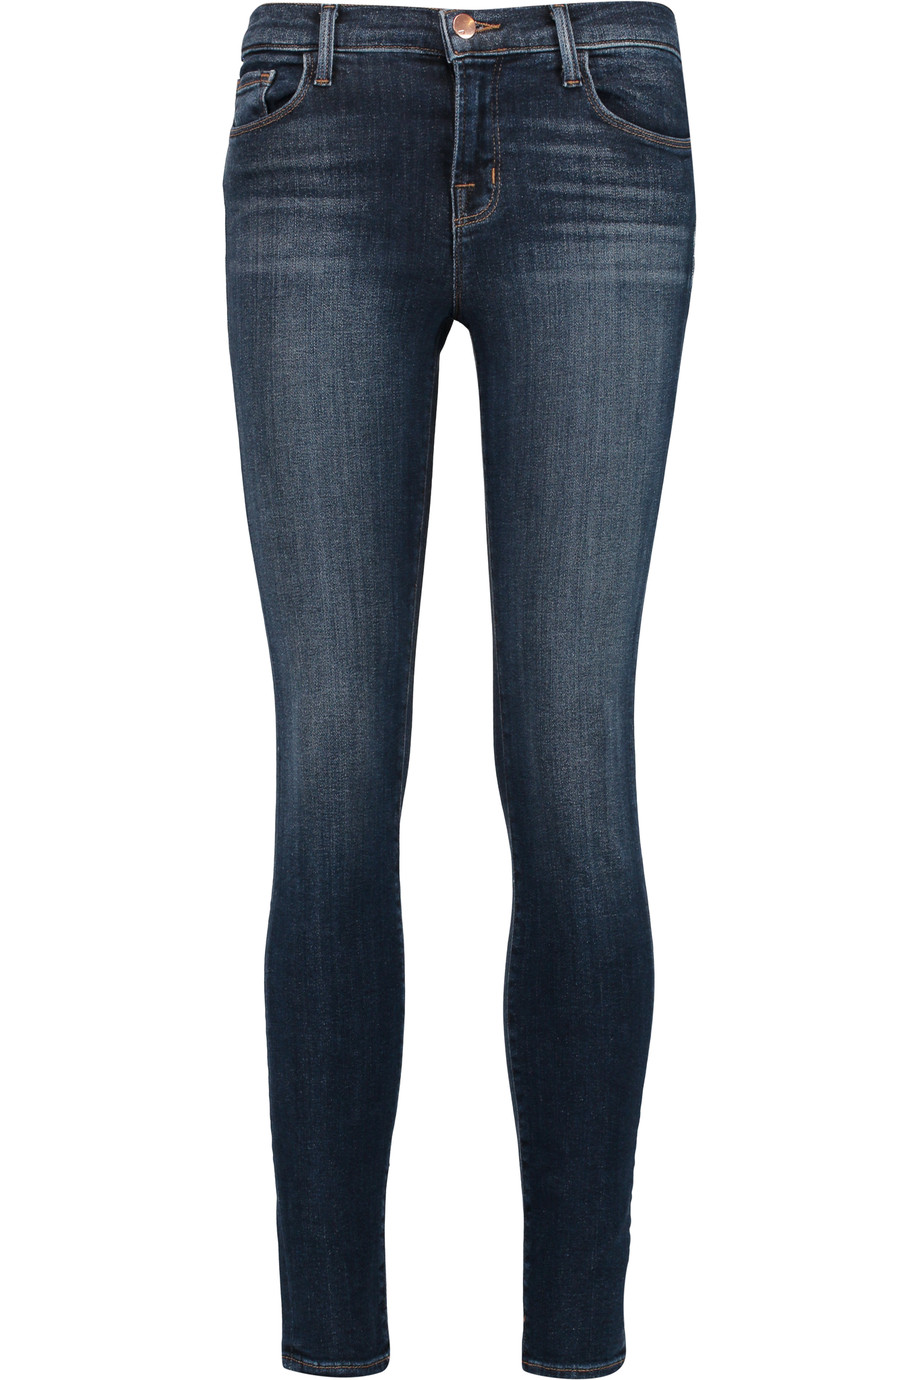 J Brand Mid-rise Skinny Jeans | ModeSens